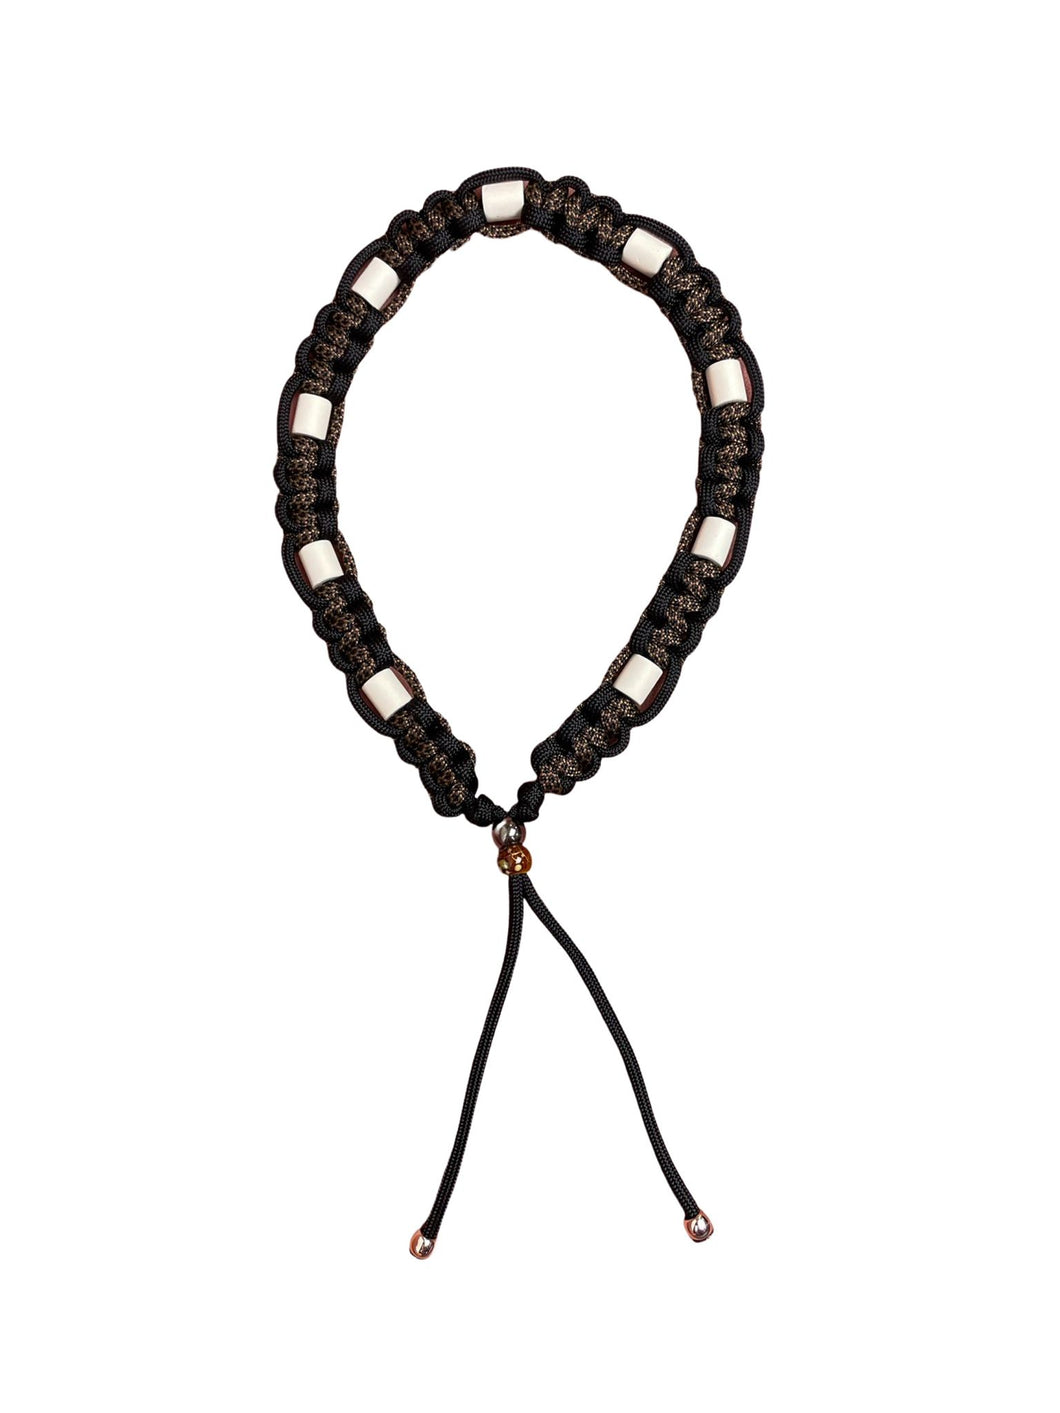 Handmade - Tick Collar Black / Hazelnut-Brown-Black (Cobra)